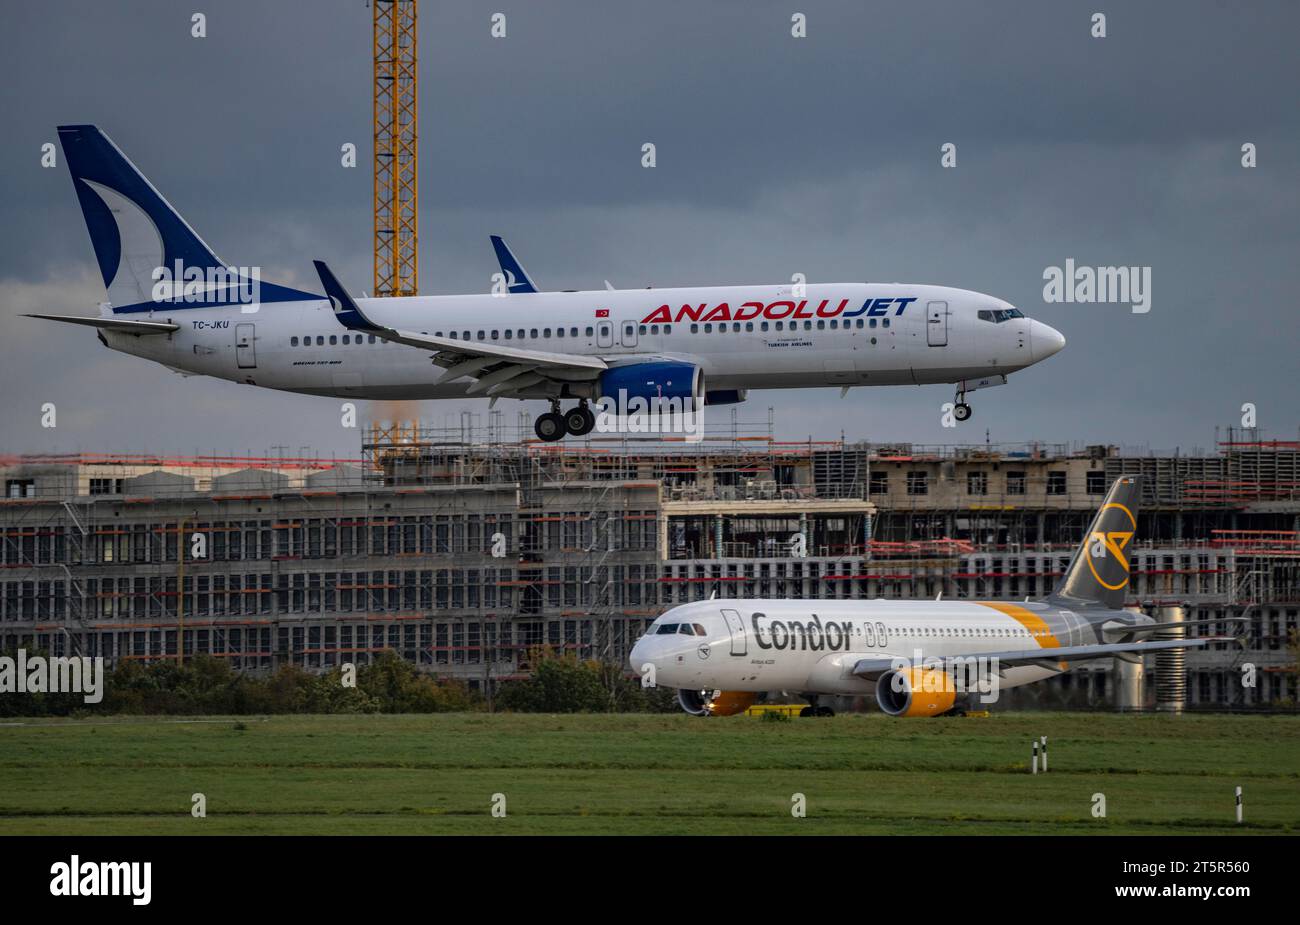 Anadolujet Boeing 737-800, TC-JKU, landing at Düsseldorf International Airport, Condor aircraft waiting for take-off, Stock Photo